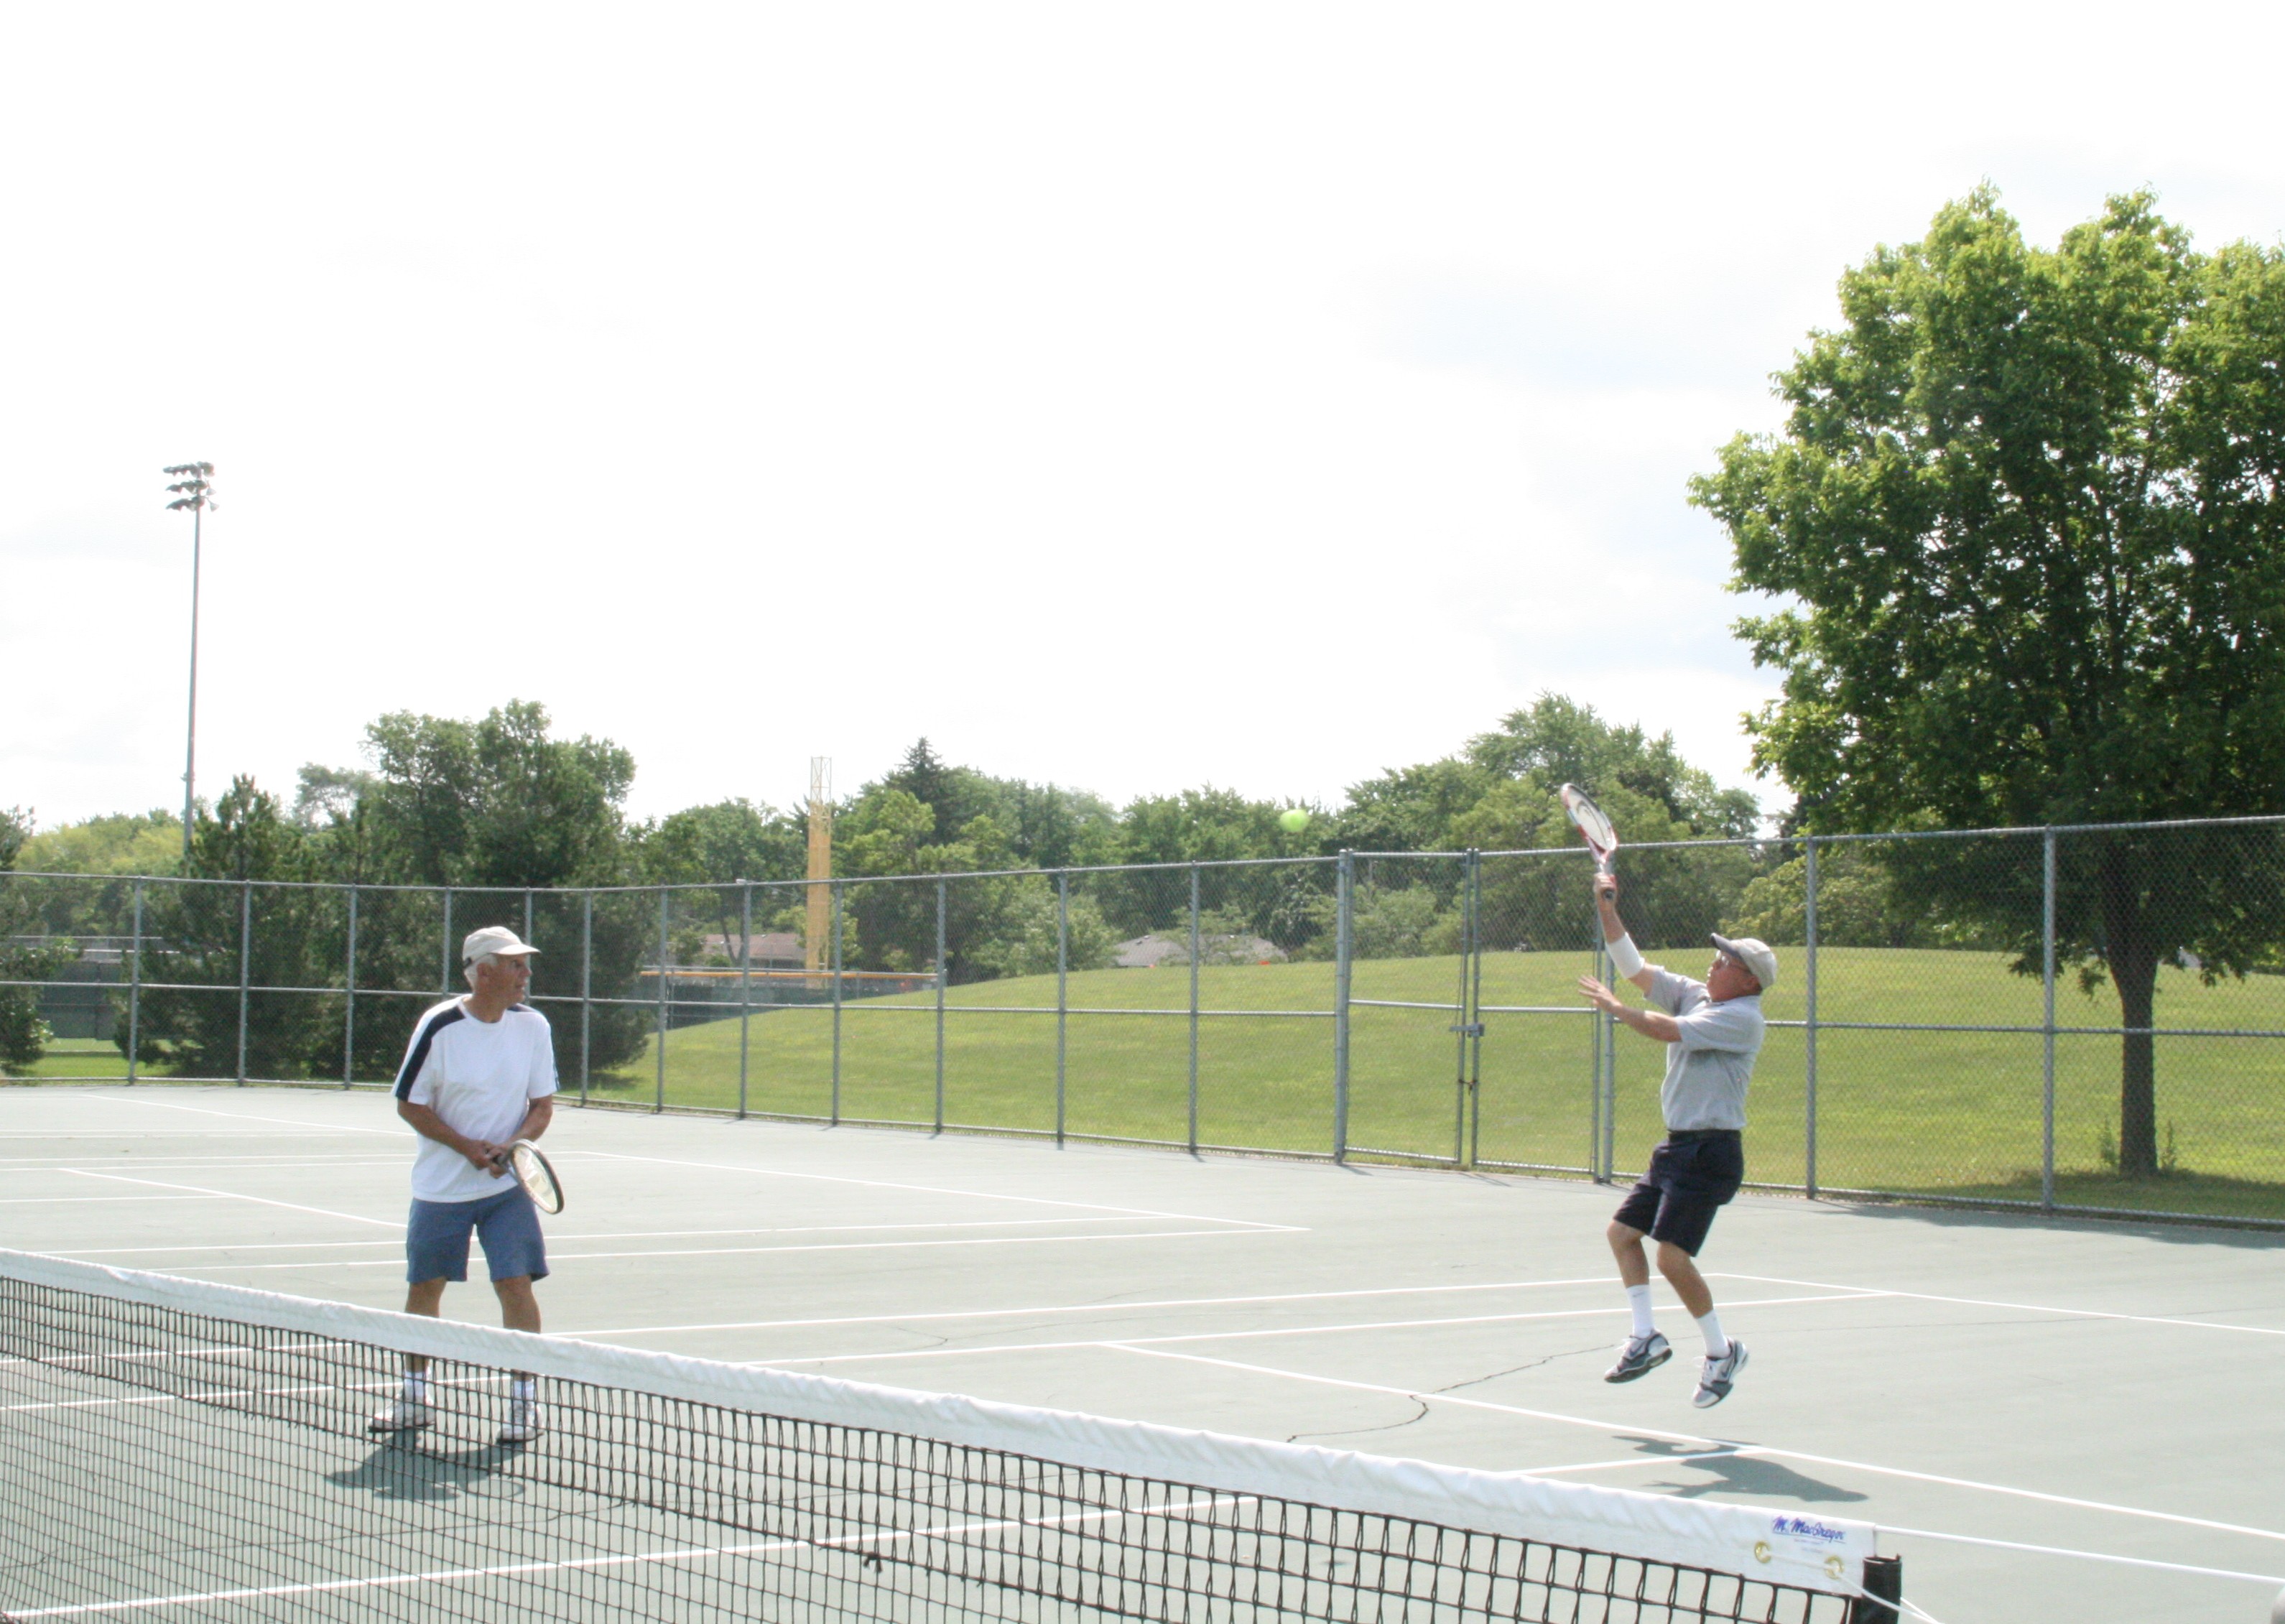 Two guys playing tennis